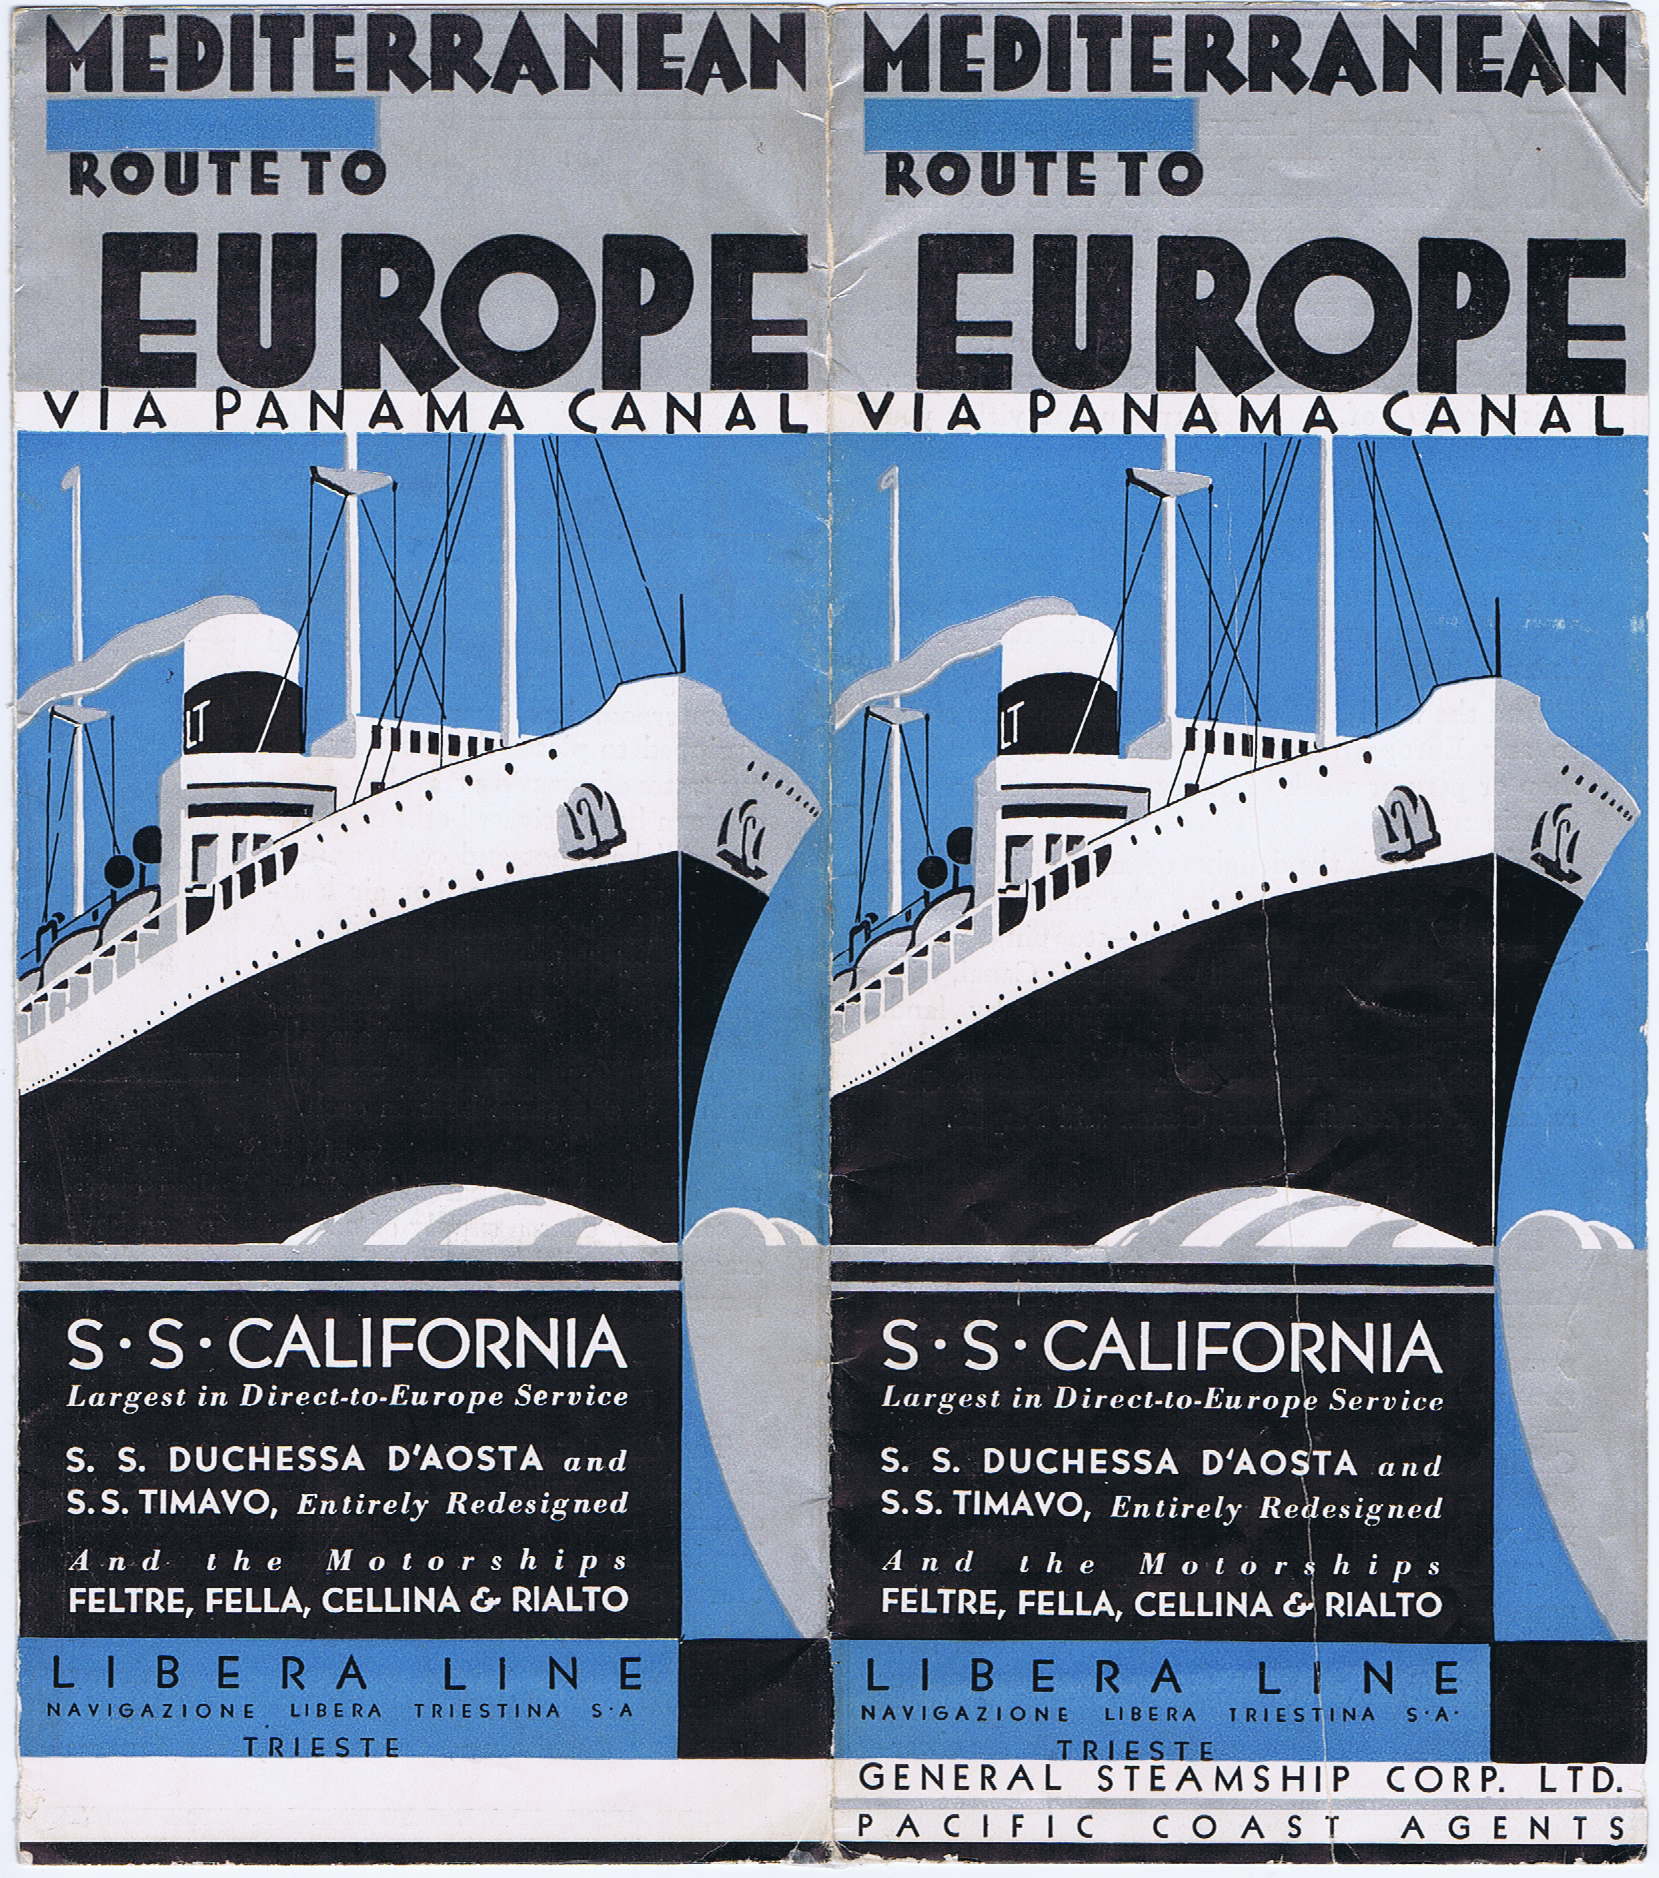 J704	MEDITERRANEAN ROUTE TO EUROPE - SS CALIFORNIA